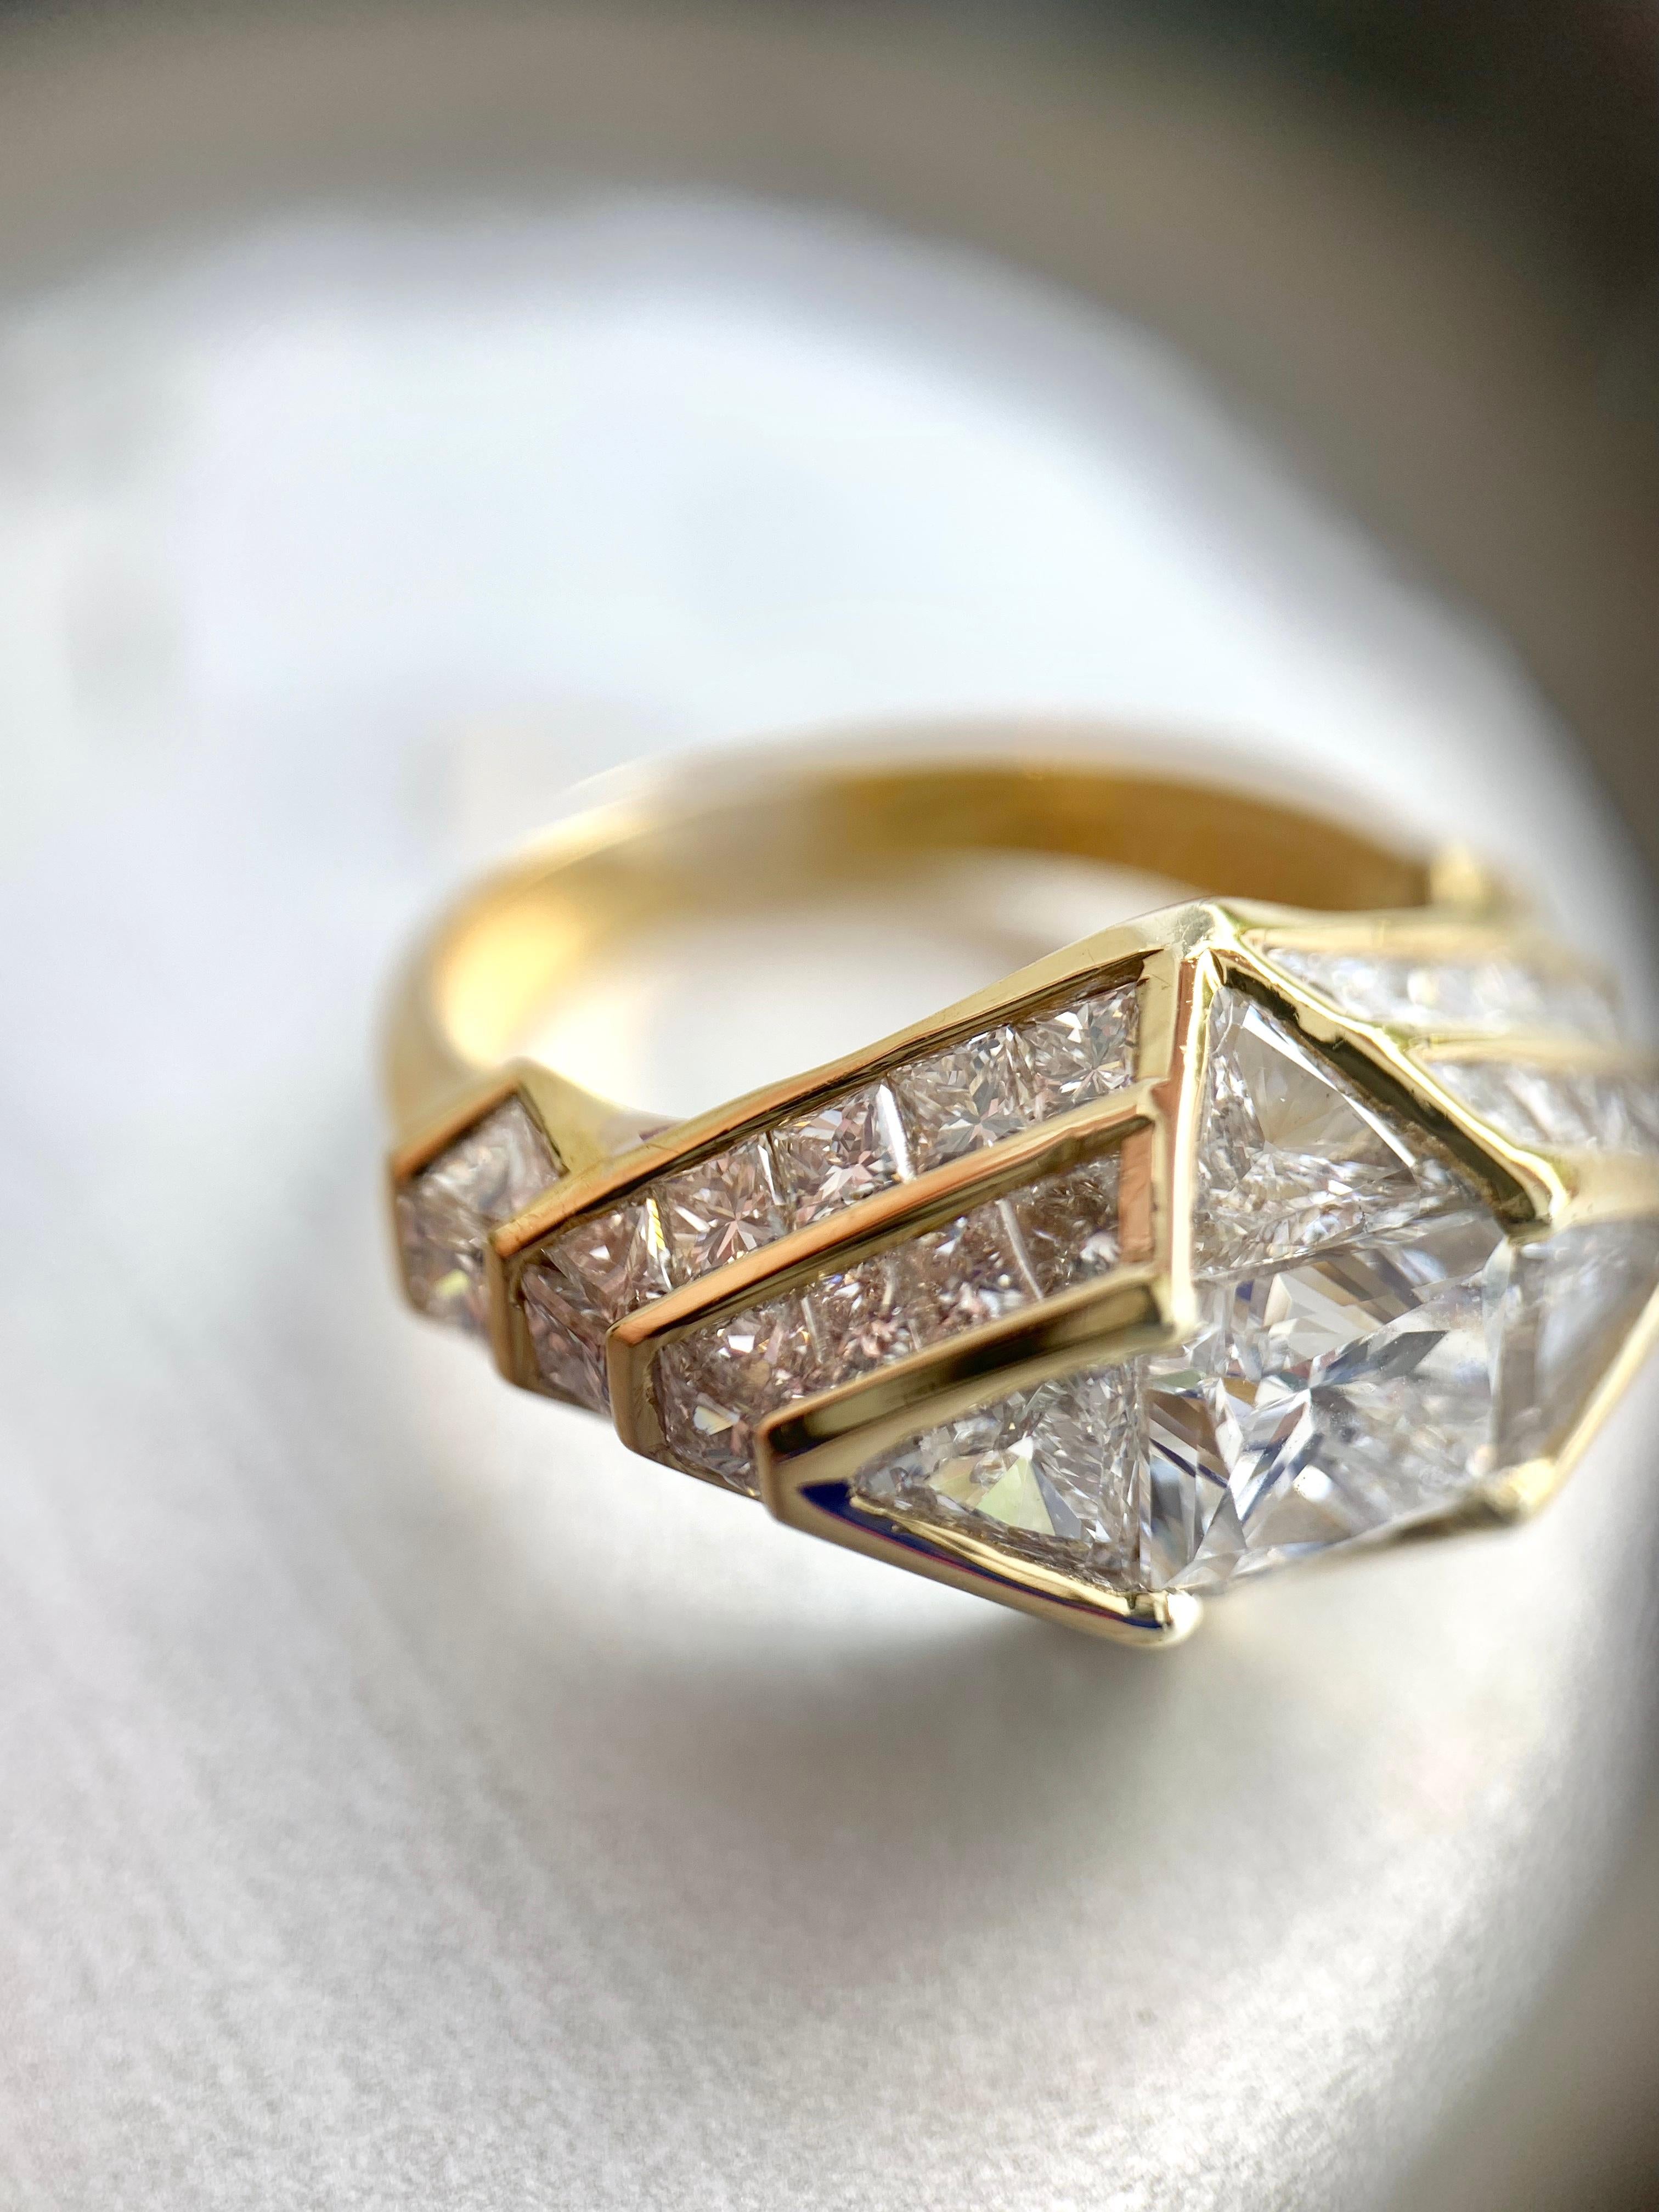 18 Karat Art Deco Inspired Diamond Ring 5.47 Carat Total Weight For Sale 10